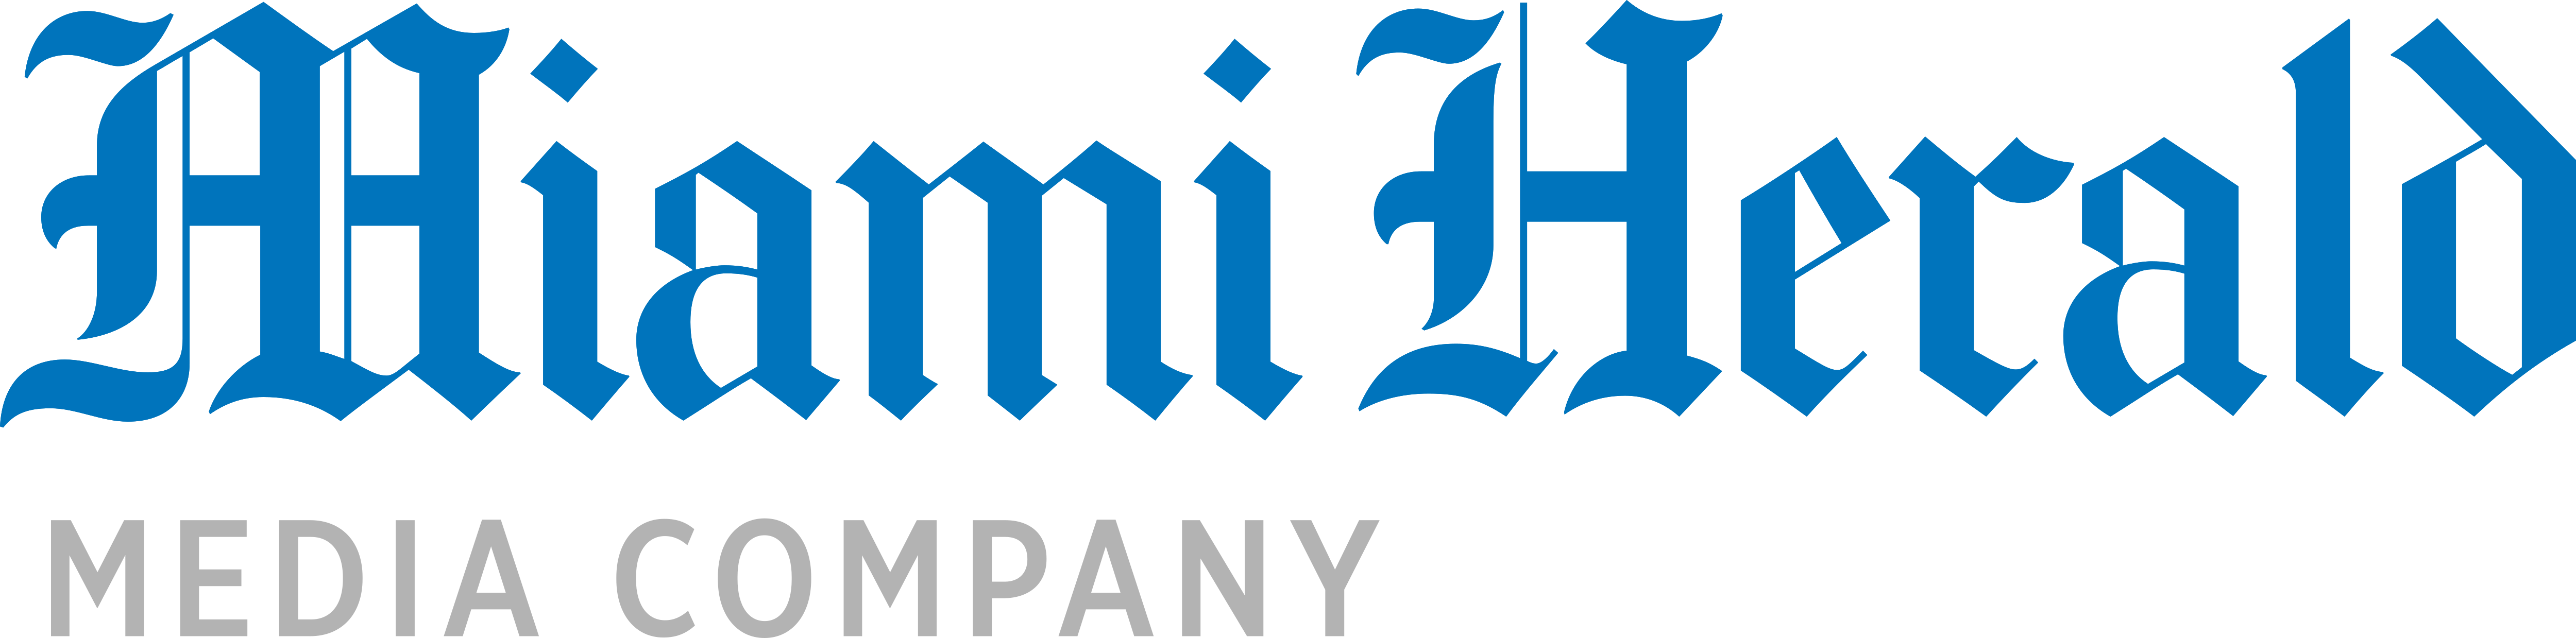 Miami Herald Logos Download